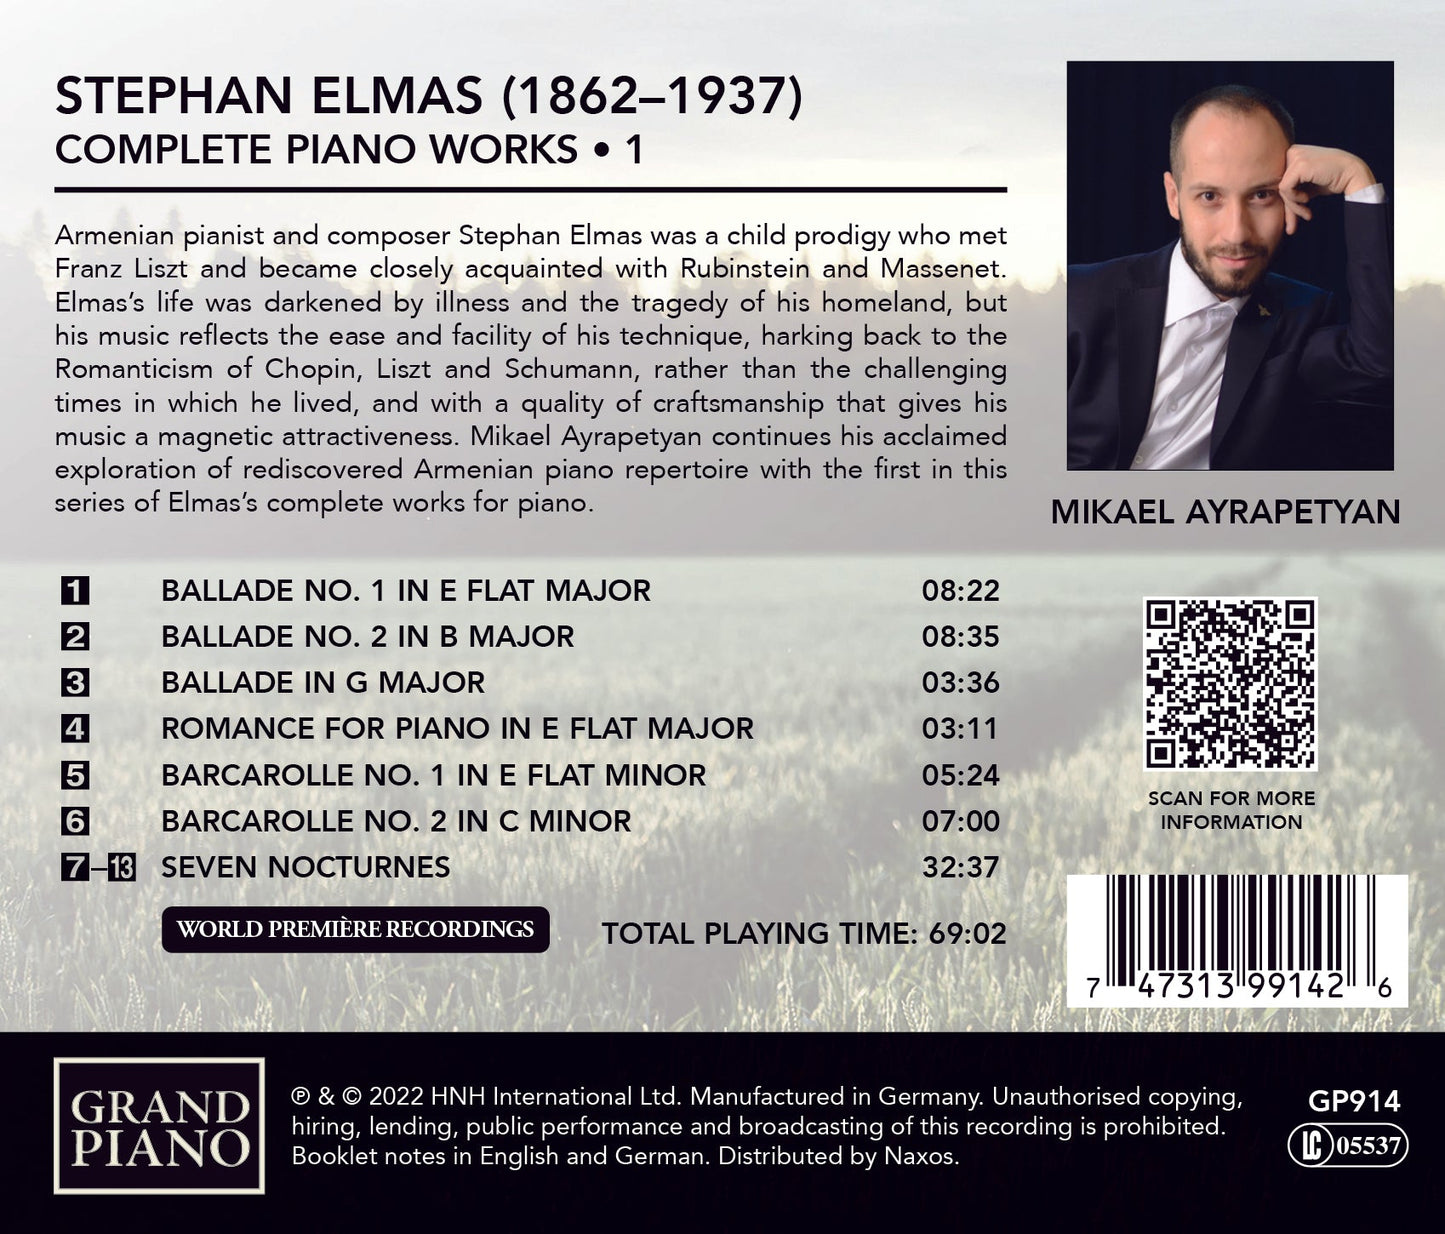 Elmas: Complete Piano Works, Vol. 1